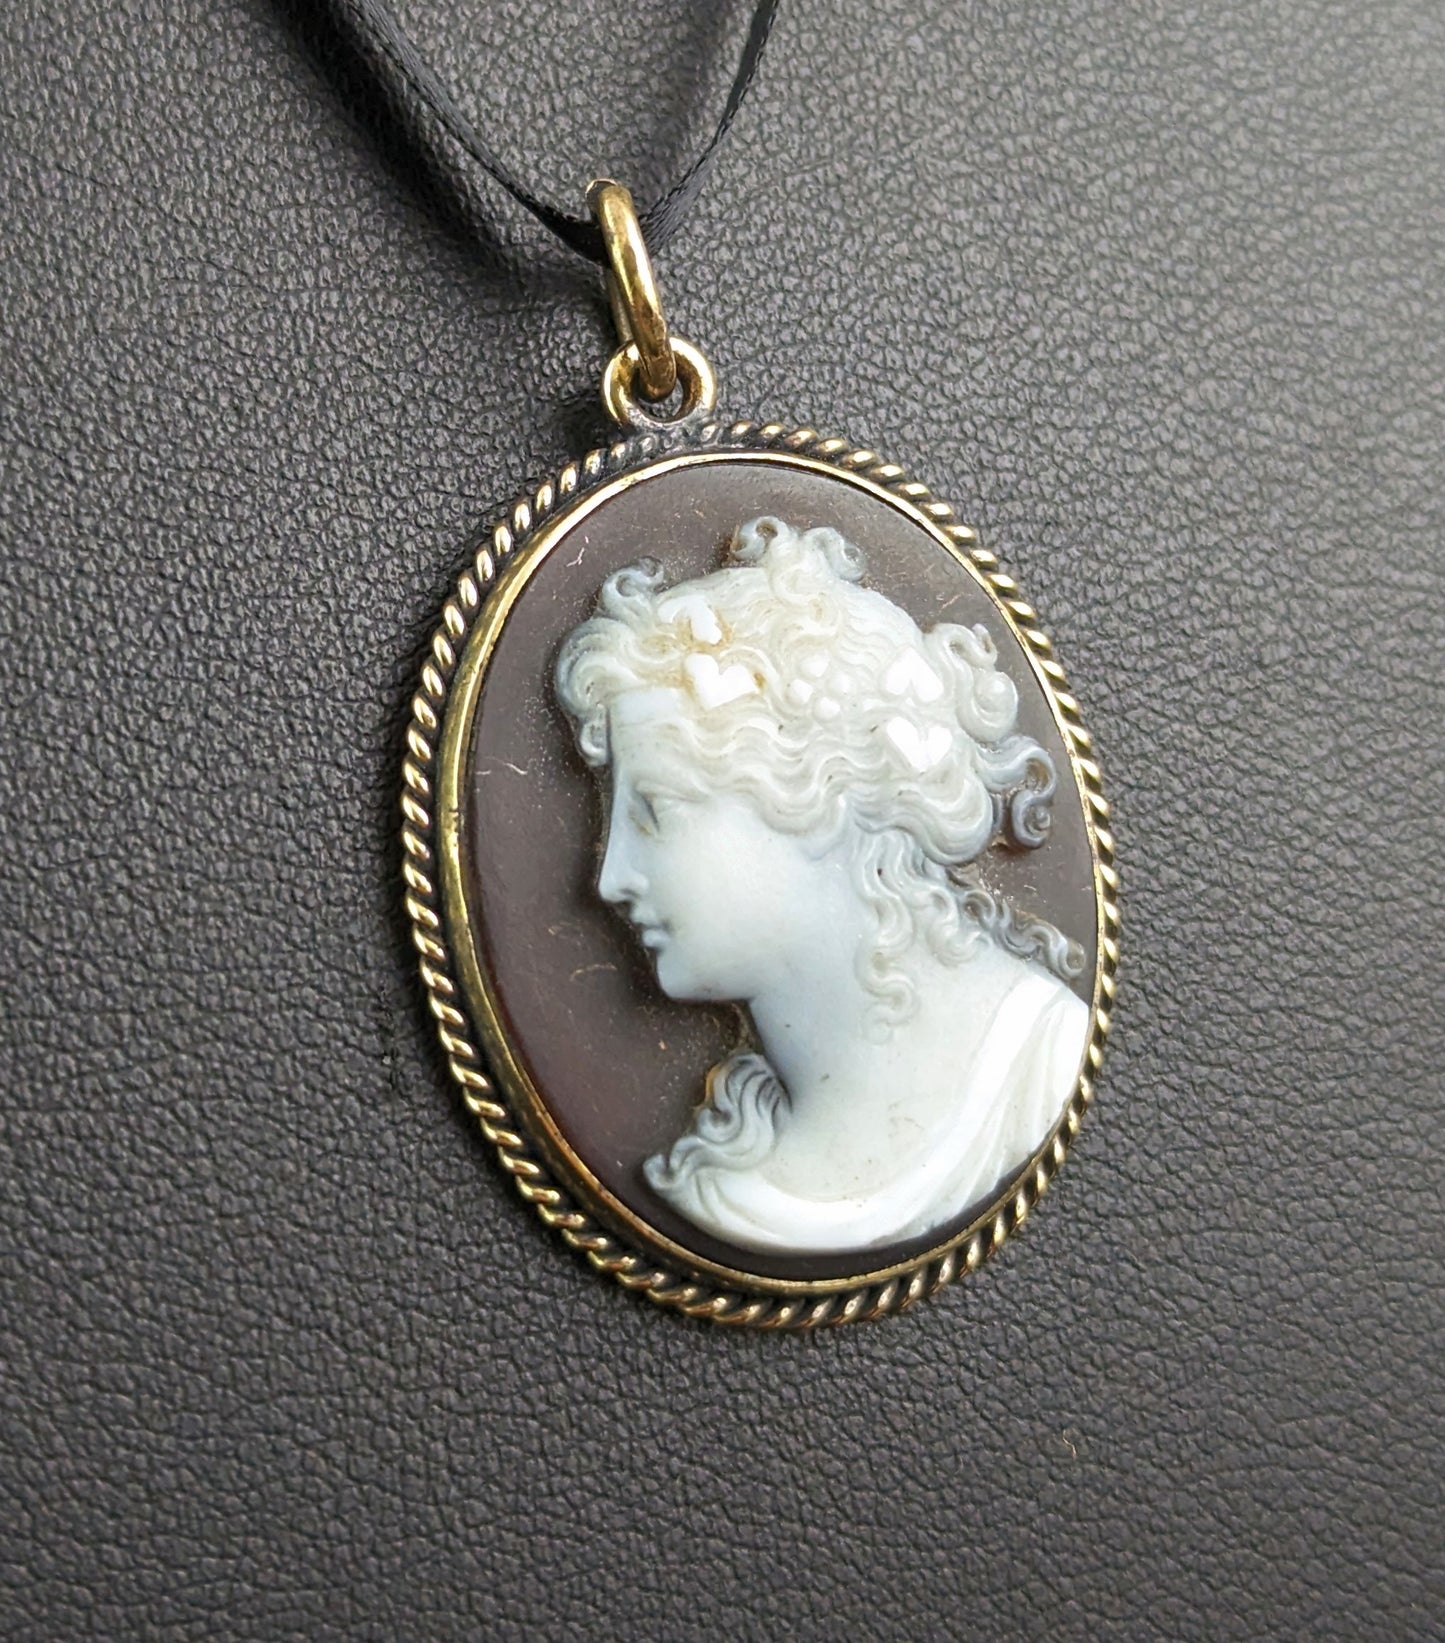 Antique Agate Cameo pendant, 9ct gold, Victorian